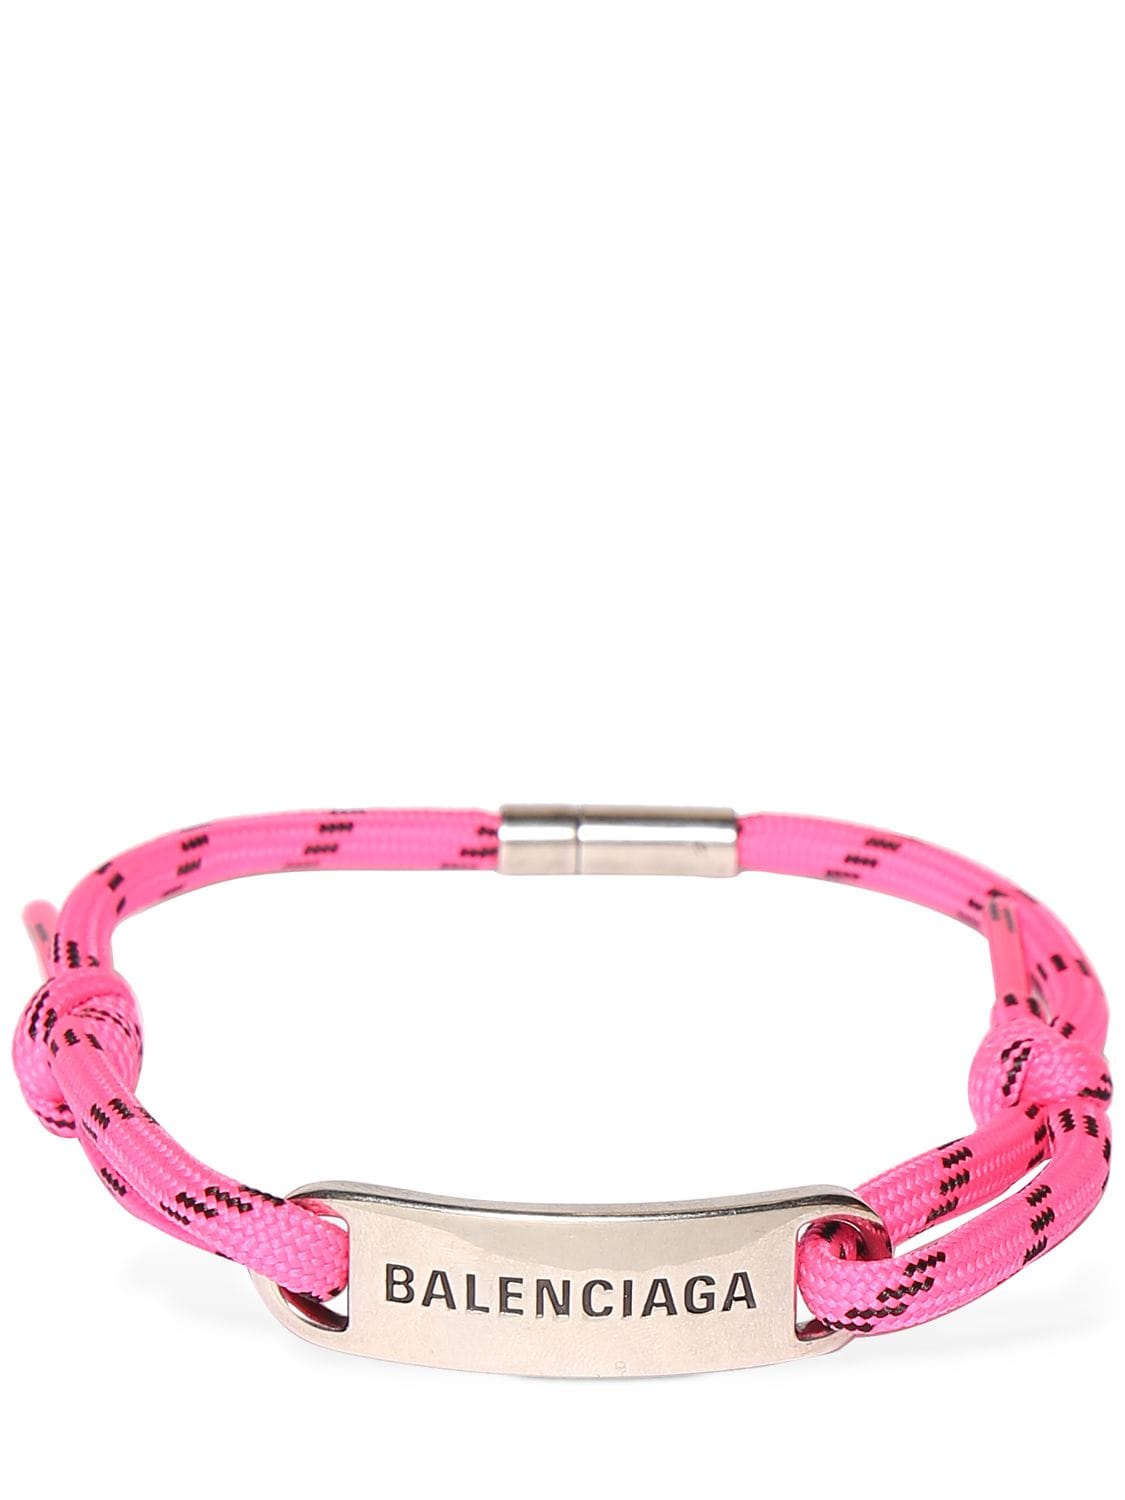 Balenciaga Plate Choker Necklace In Hot Pink